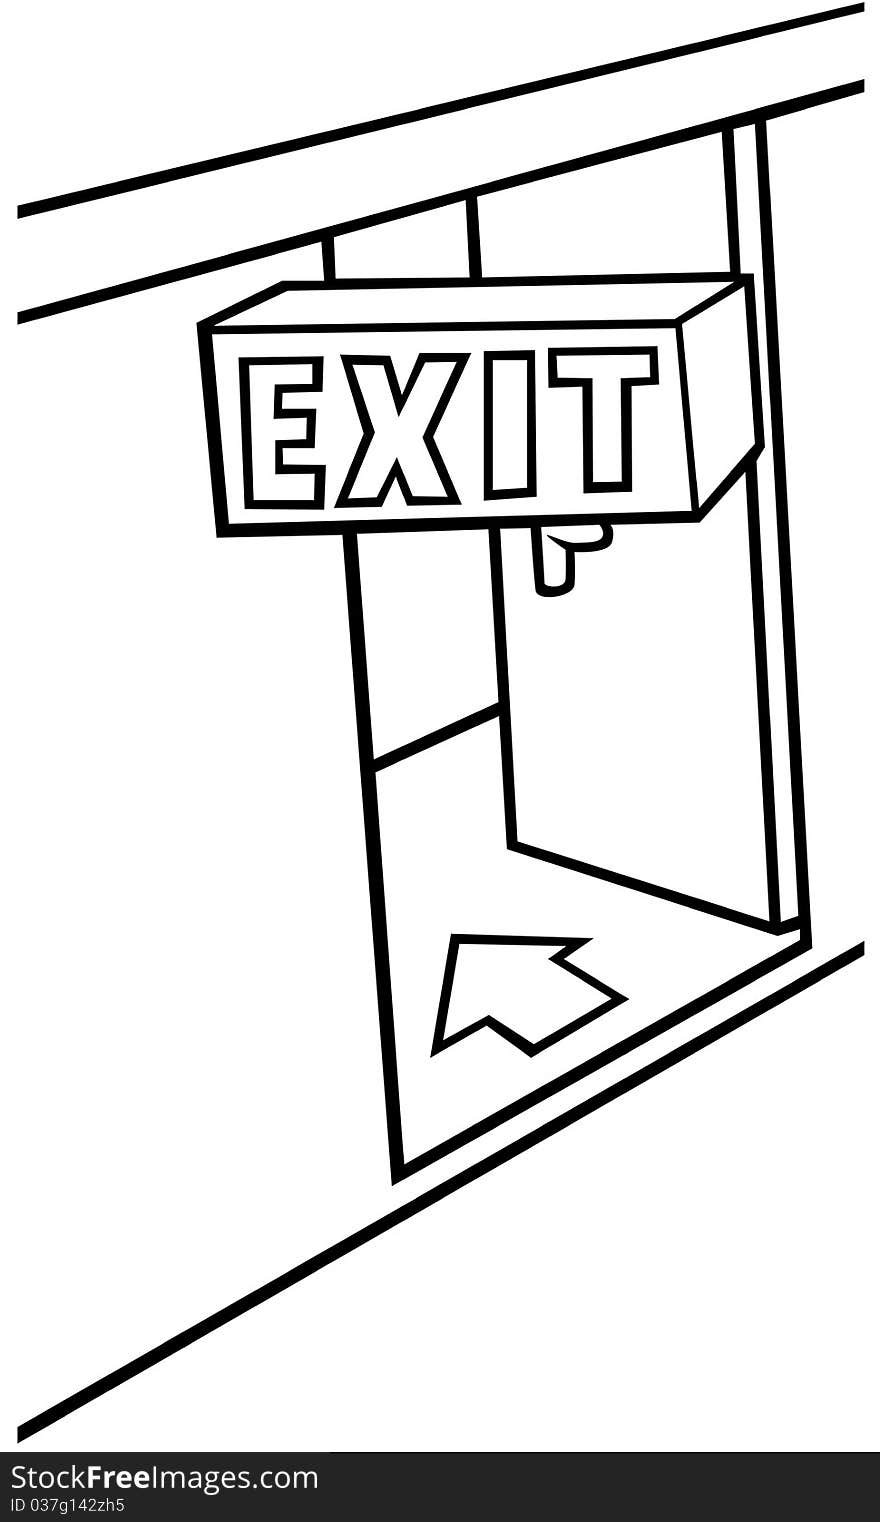 Exit Door - Black and White Cartoon illustration, Vector